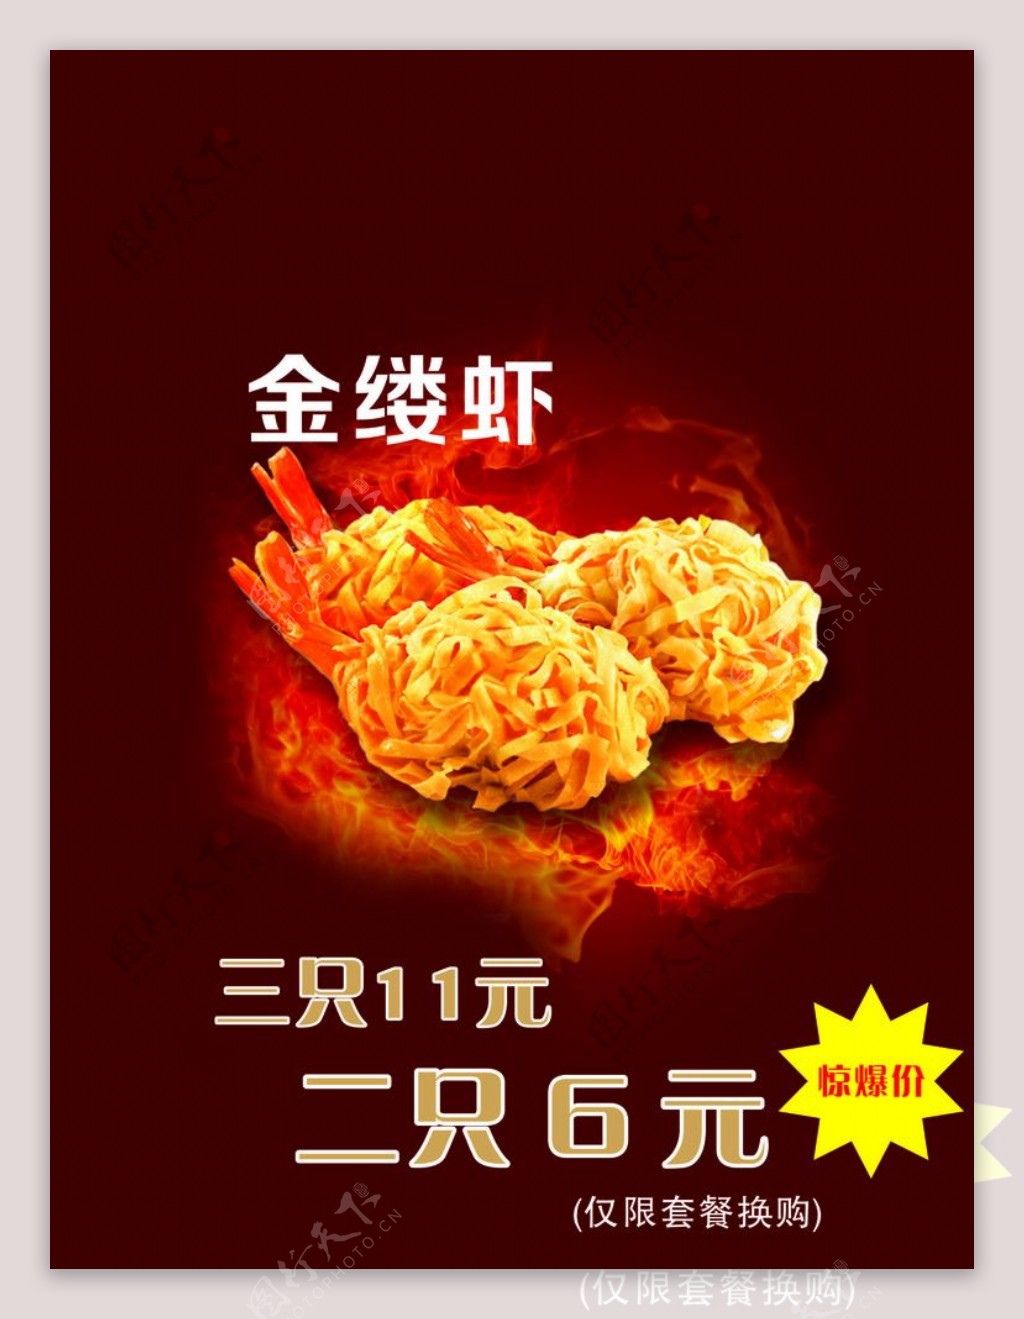 KFC金缕虾图片